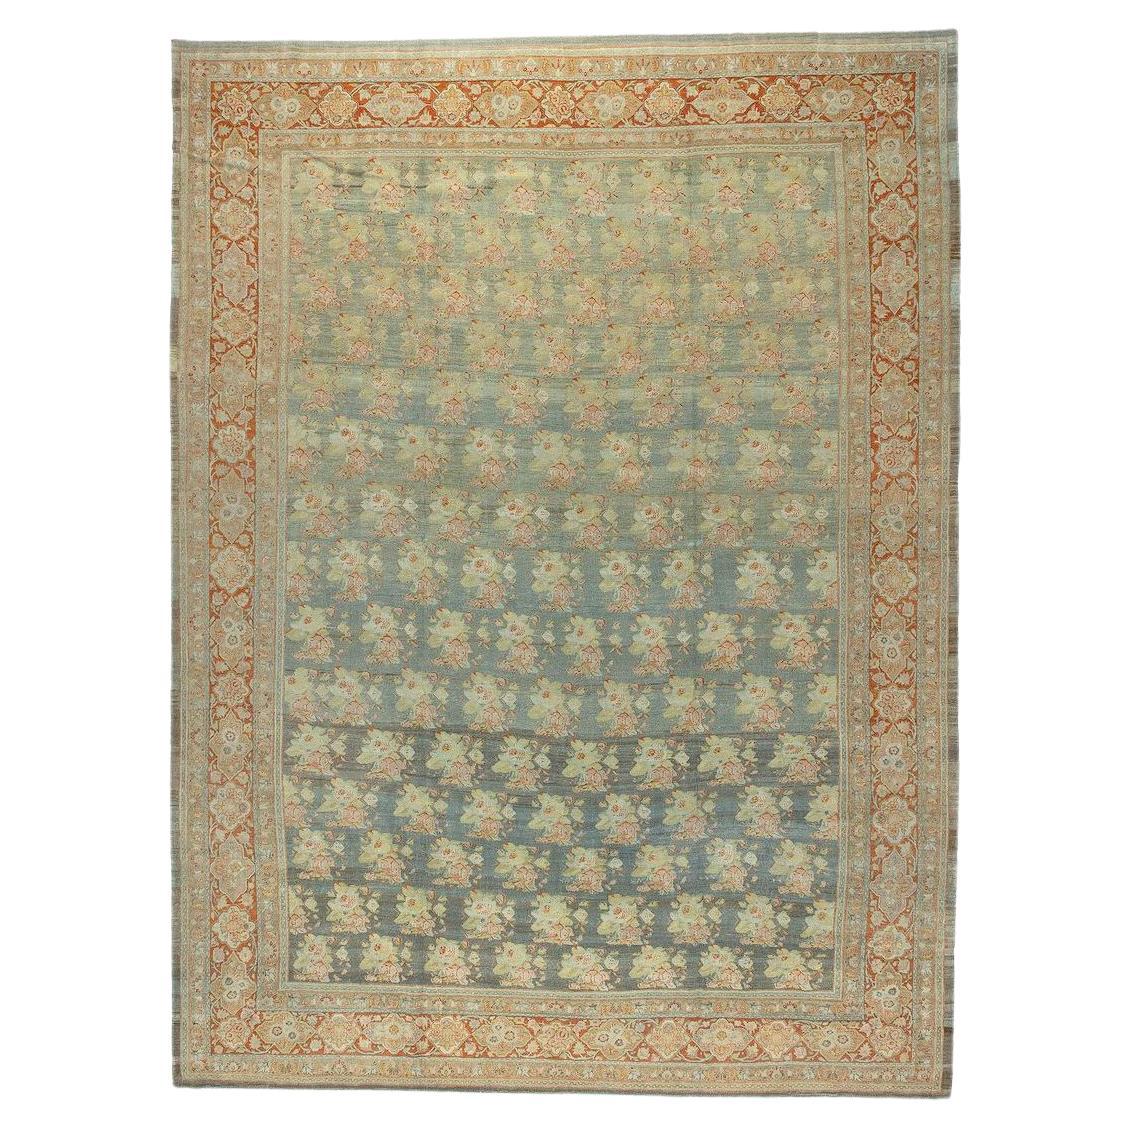 Antiker persischer Bidjar-Blumenteppich aus der Zabihi-Kollektion